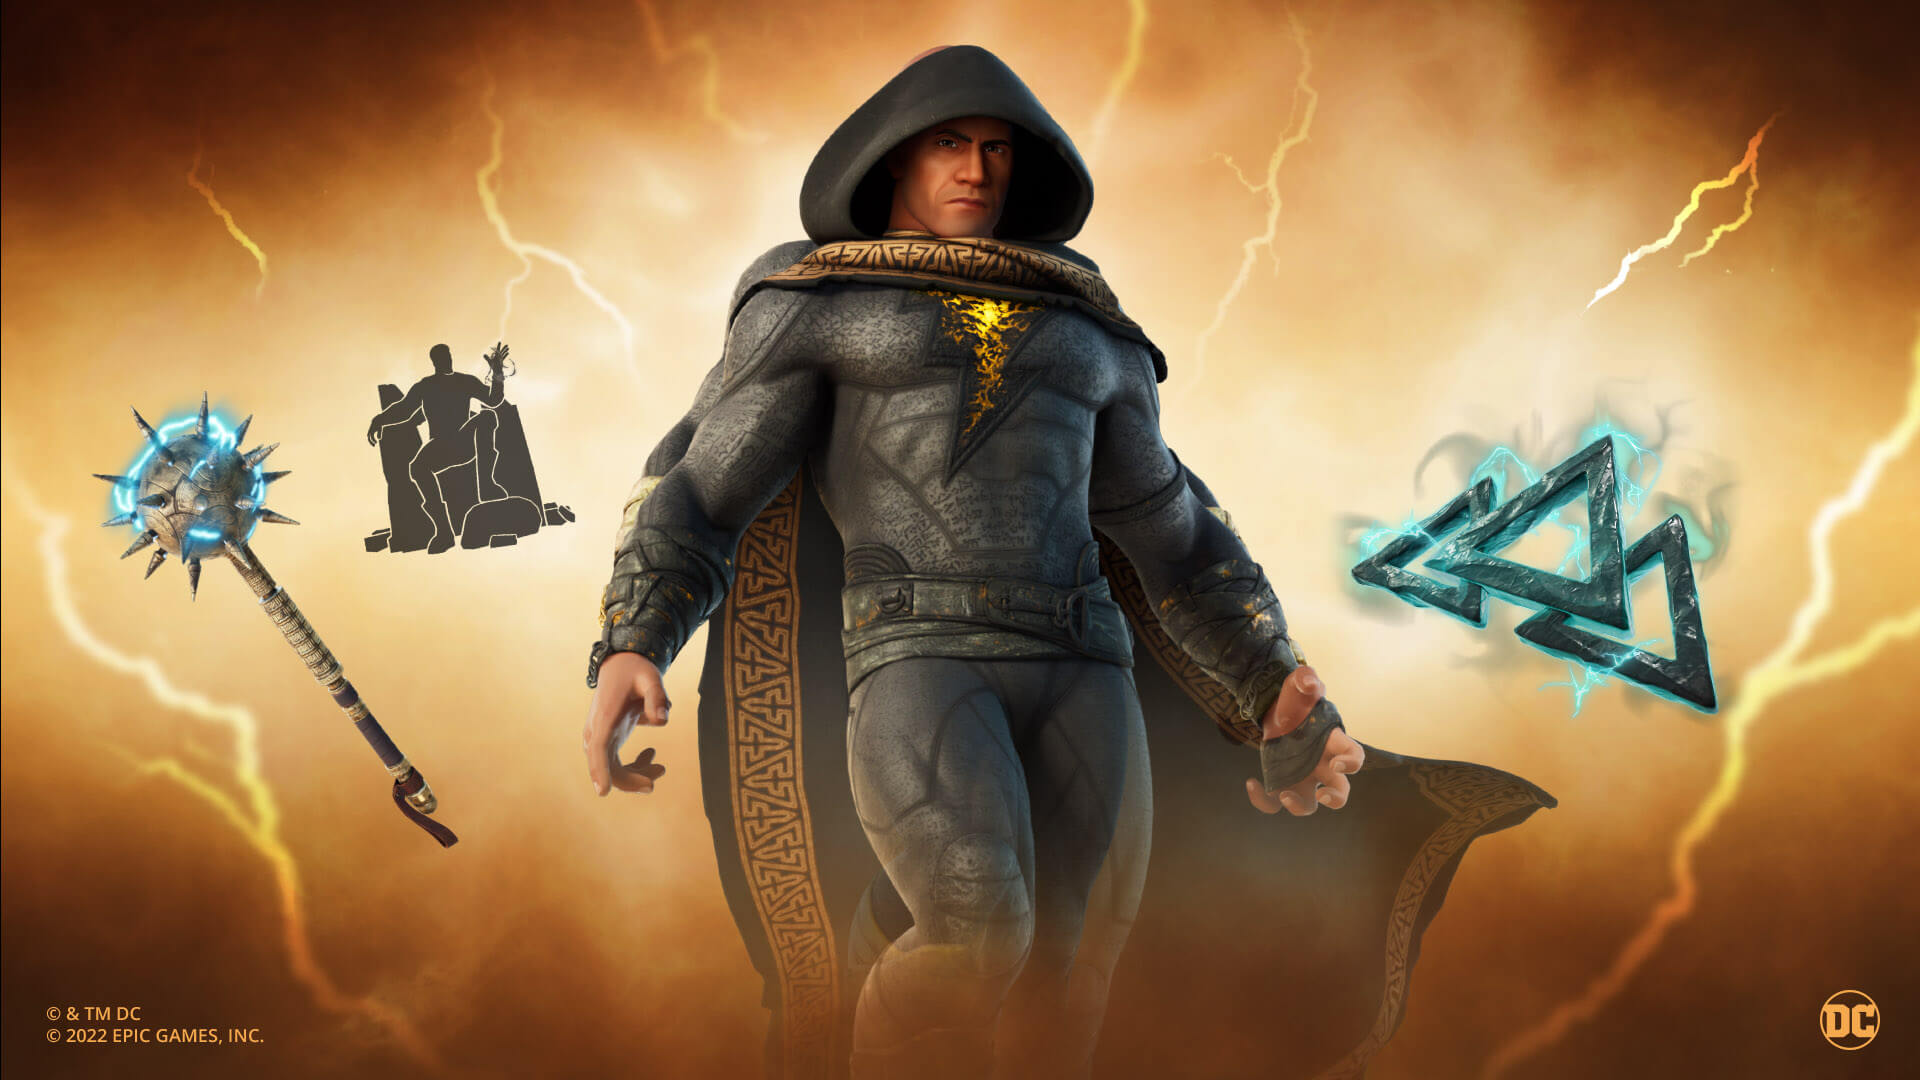 Fortnite x Black Adam Collaboration: DC’s Black Adam has come to wreak havoc in Fortnite Chapter 3 Season 4